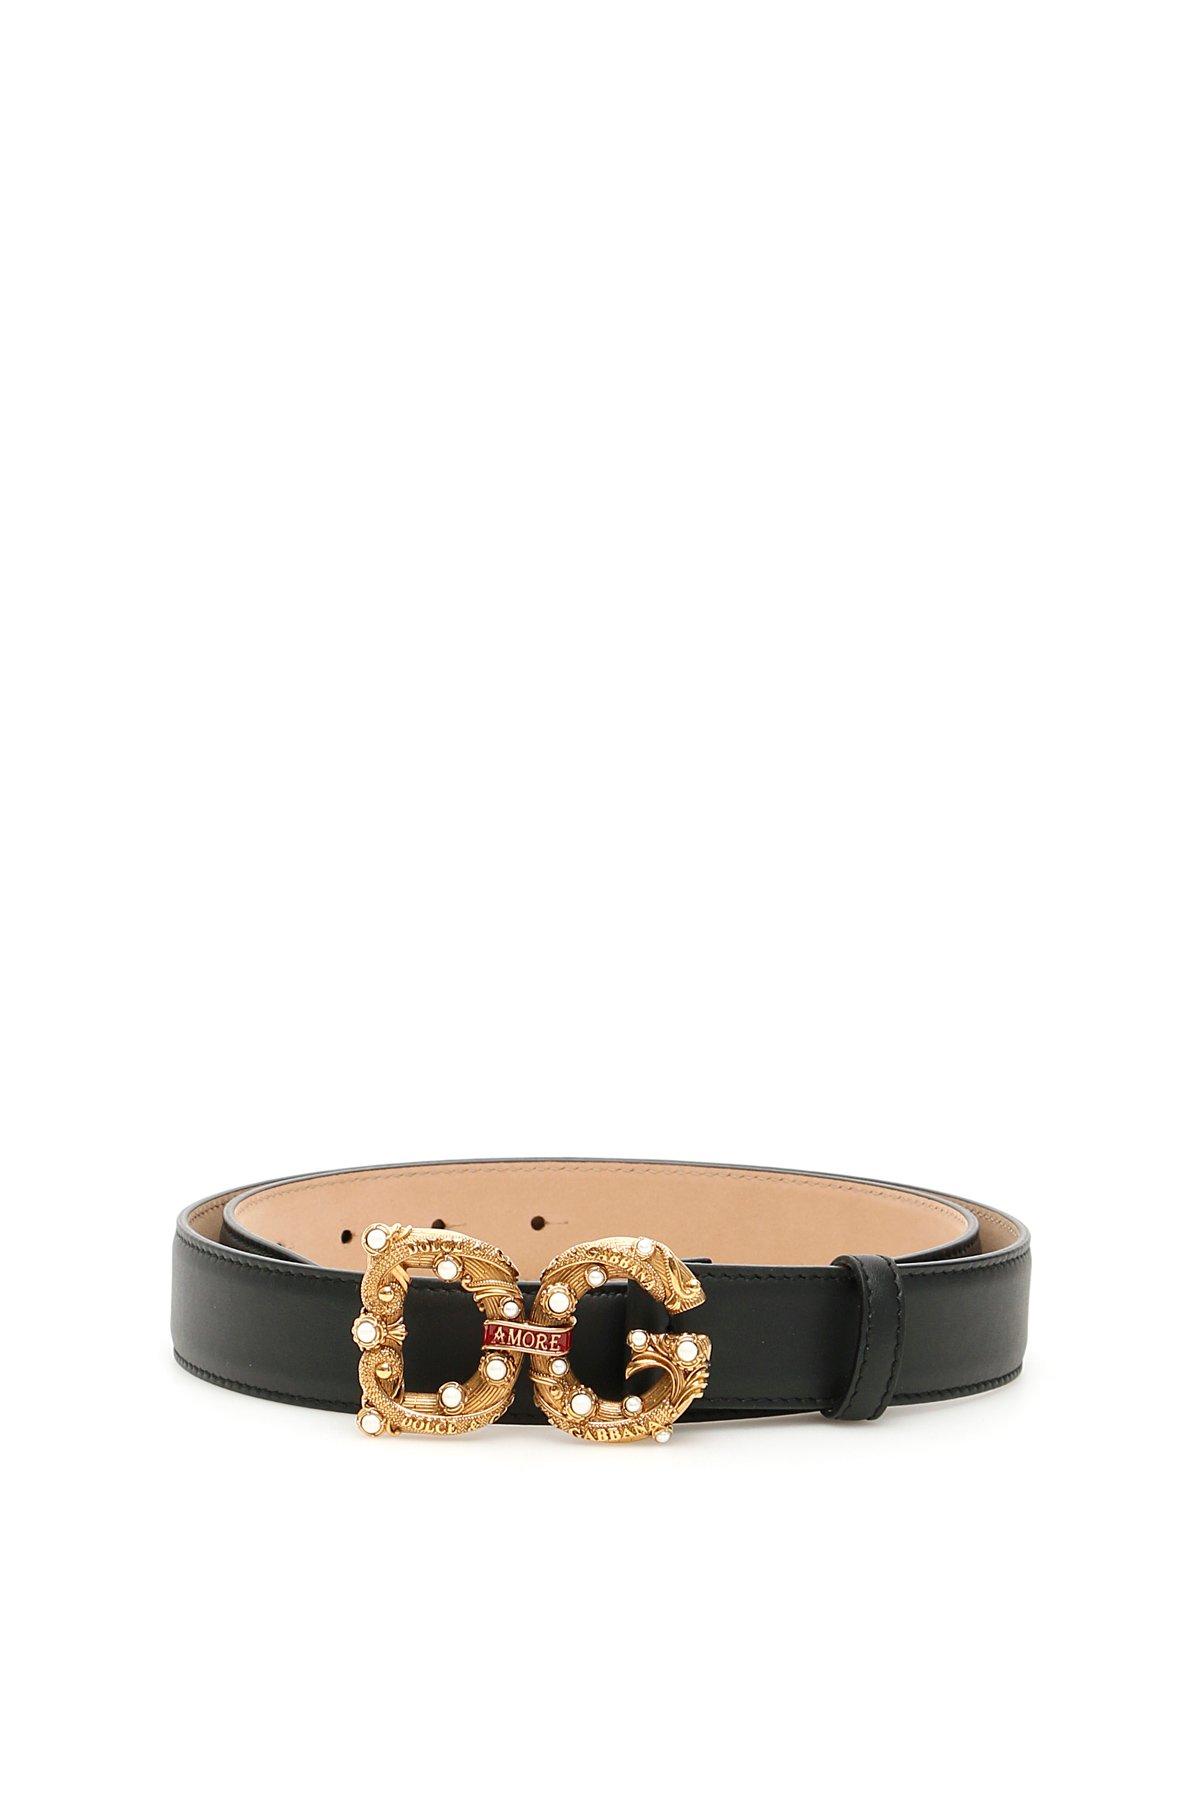 Dolce & Gabbana Leather Dg Amore Belt in Black - Lyst